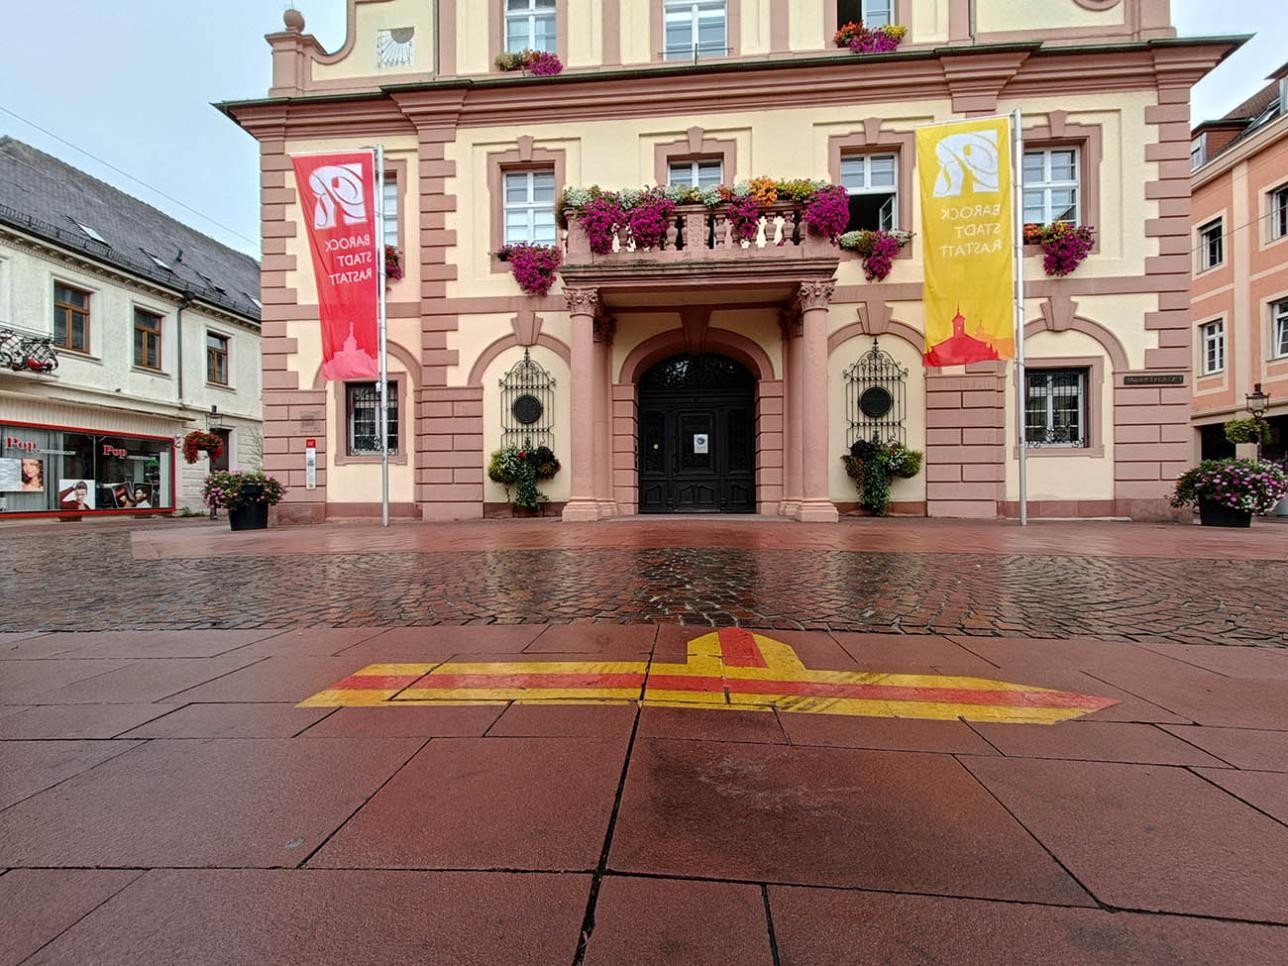 Hôtel de ville historique de Rastatt